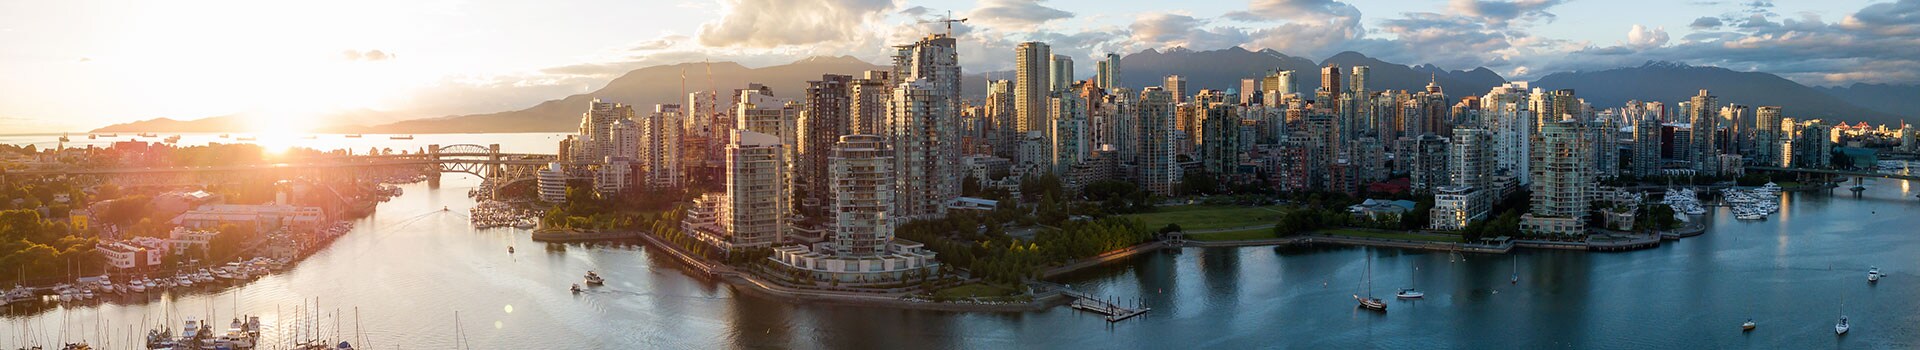 Londra - Vancouver intl